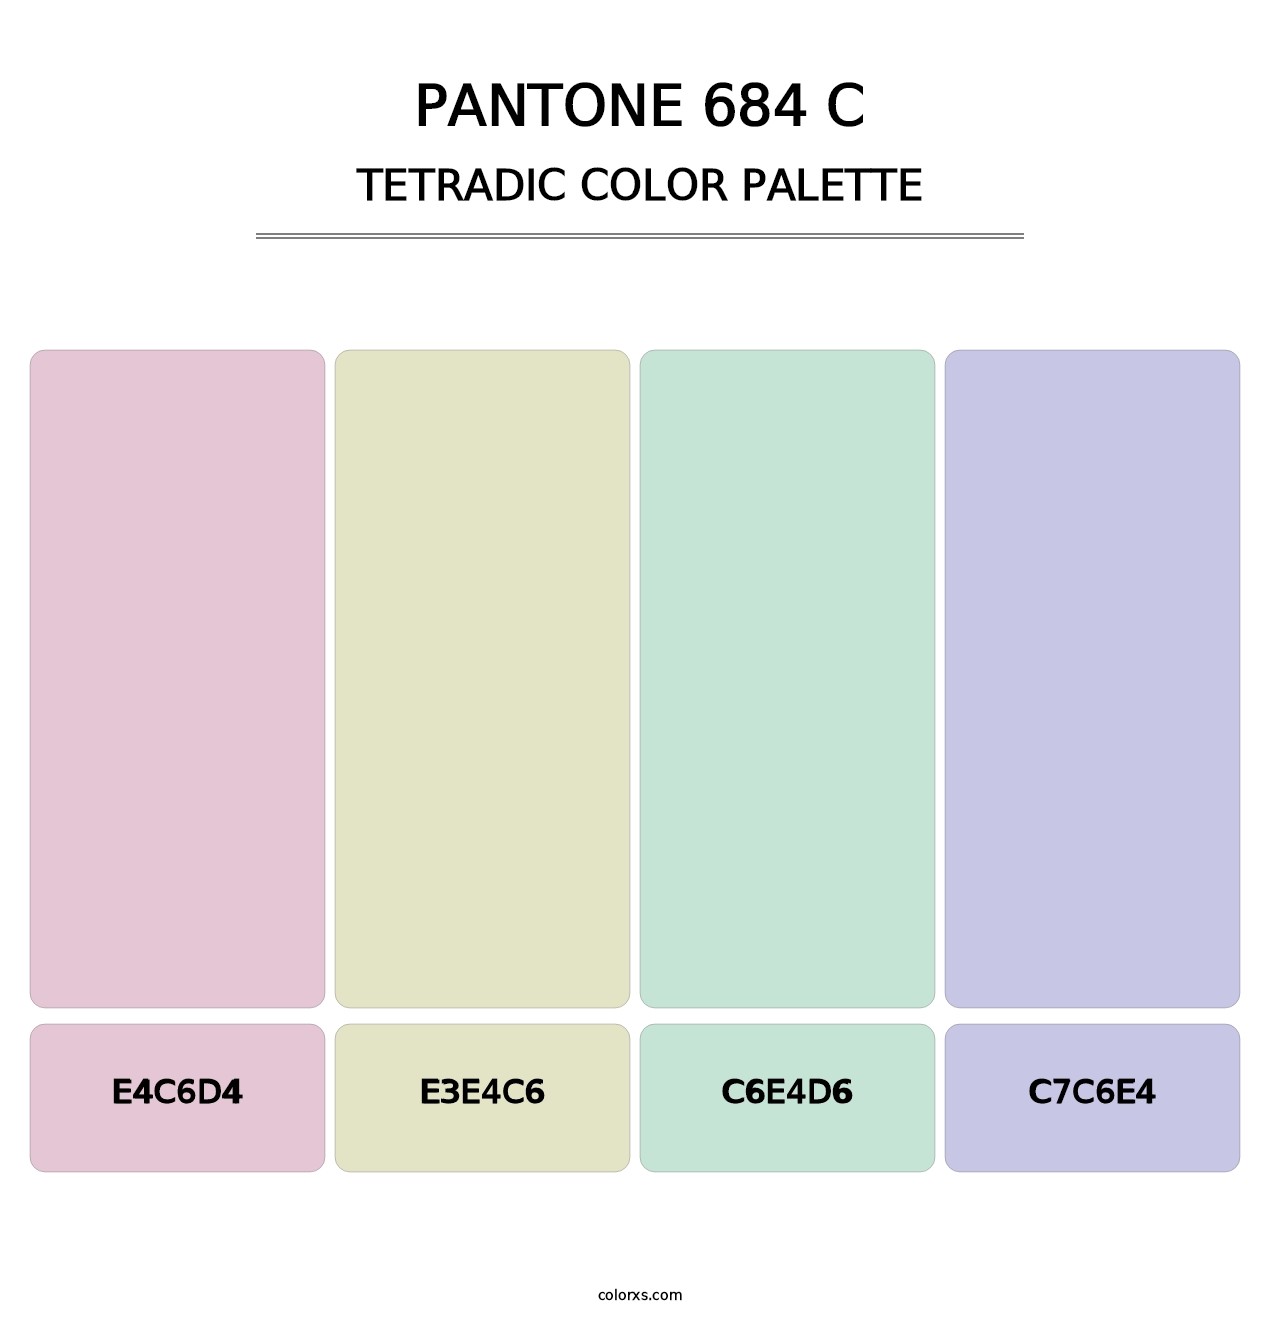 PANTONE 684 C - Tetradic Color Palette